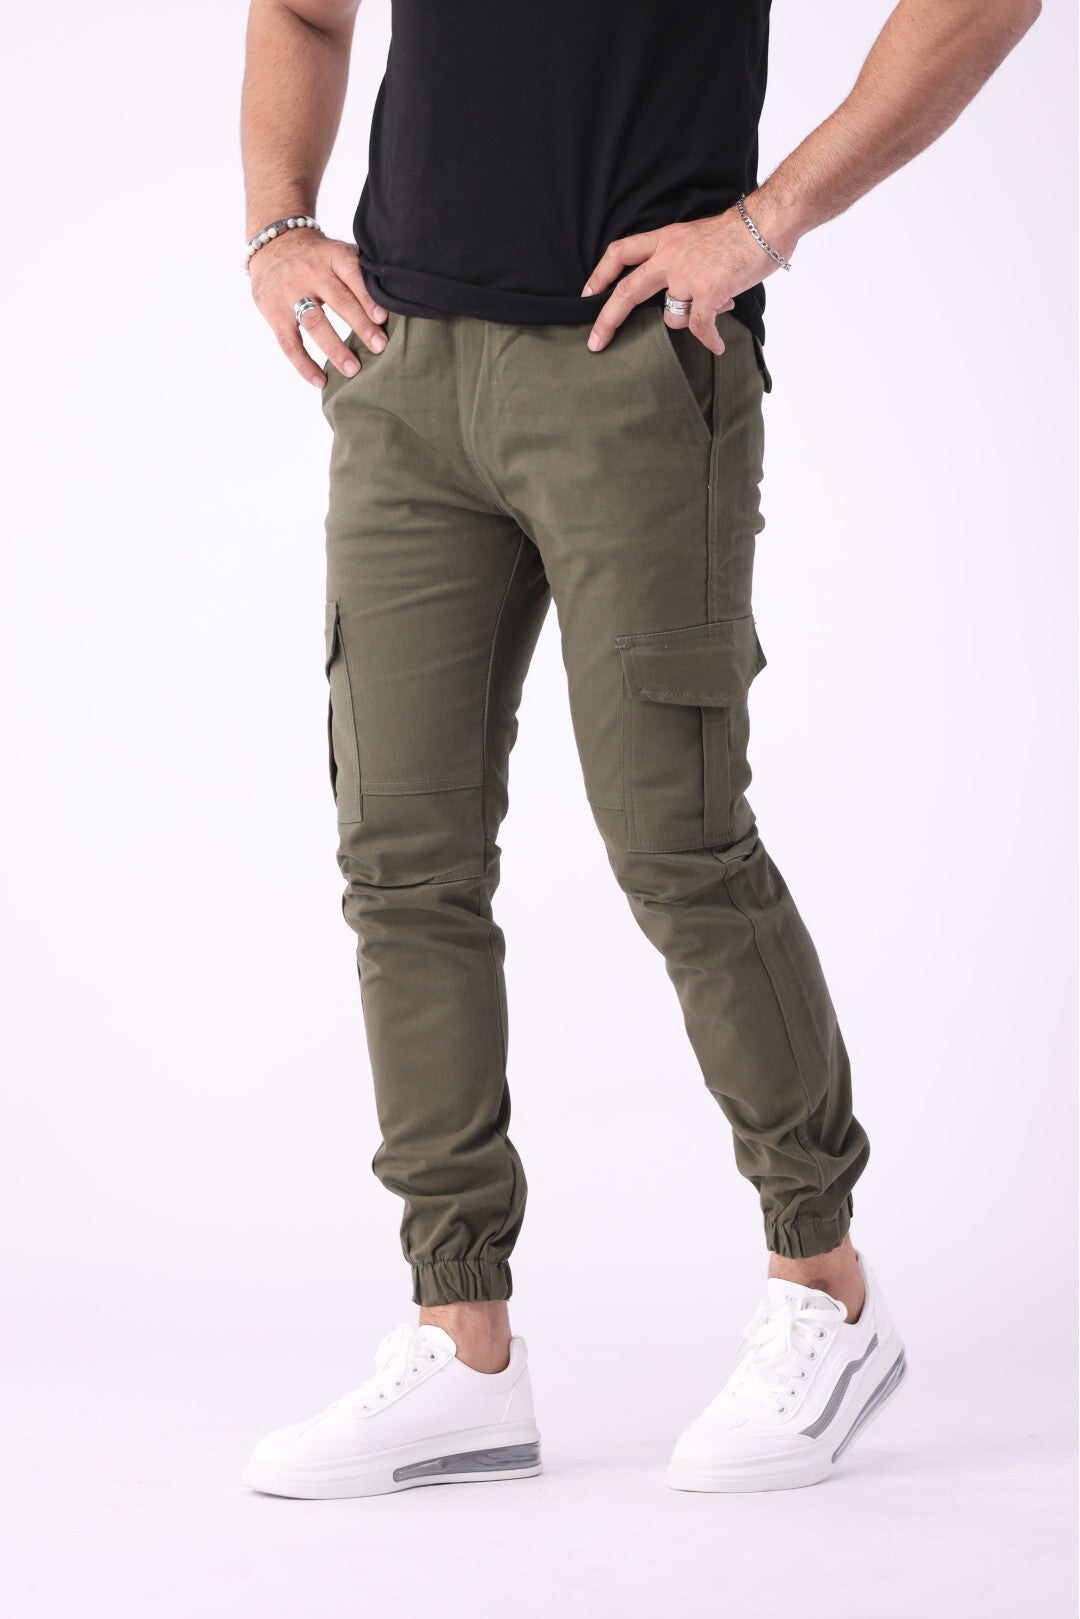 RDT Online SHOP - Cargo pants 6 pocket men's skinny pants... | Facebook